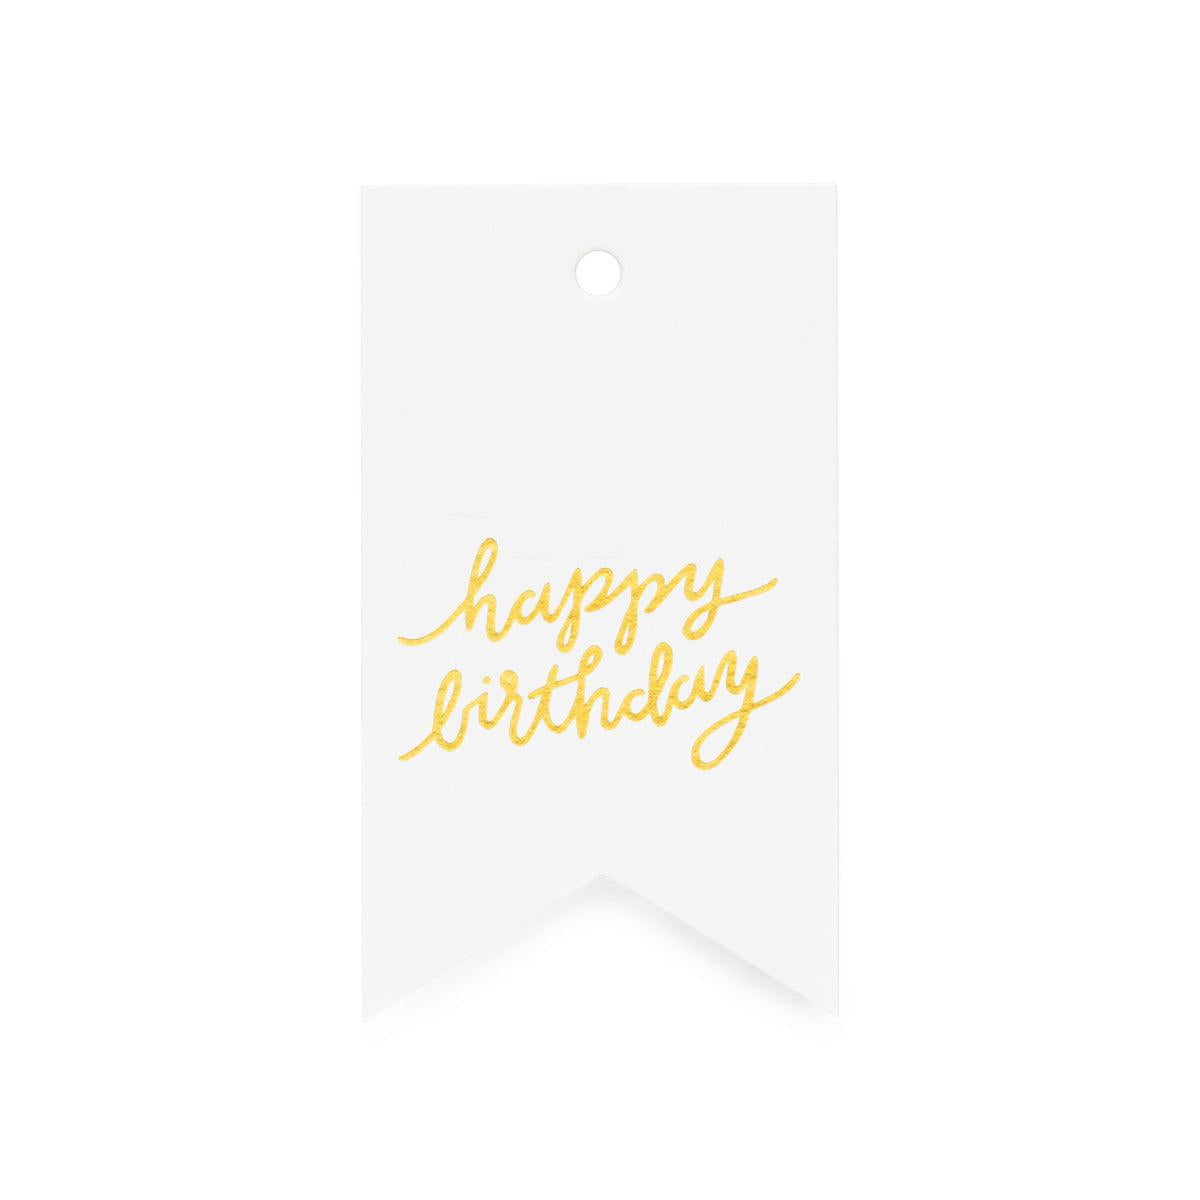 Sugar Paper - Gold 'Happy Birthday' Gift Tag (1CT)